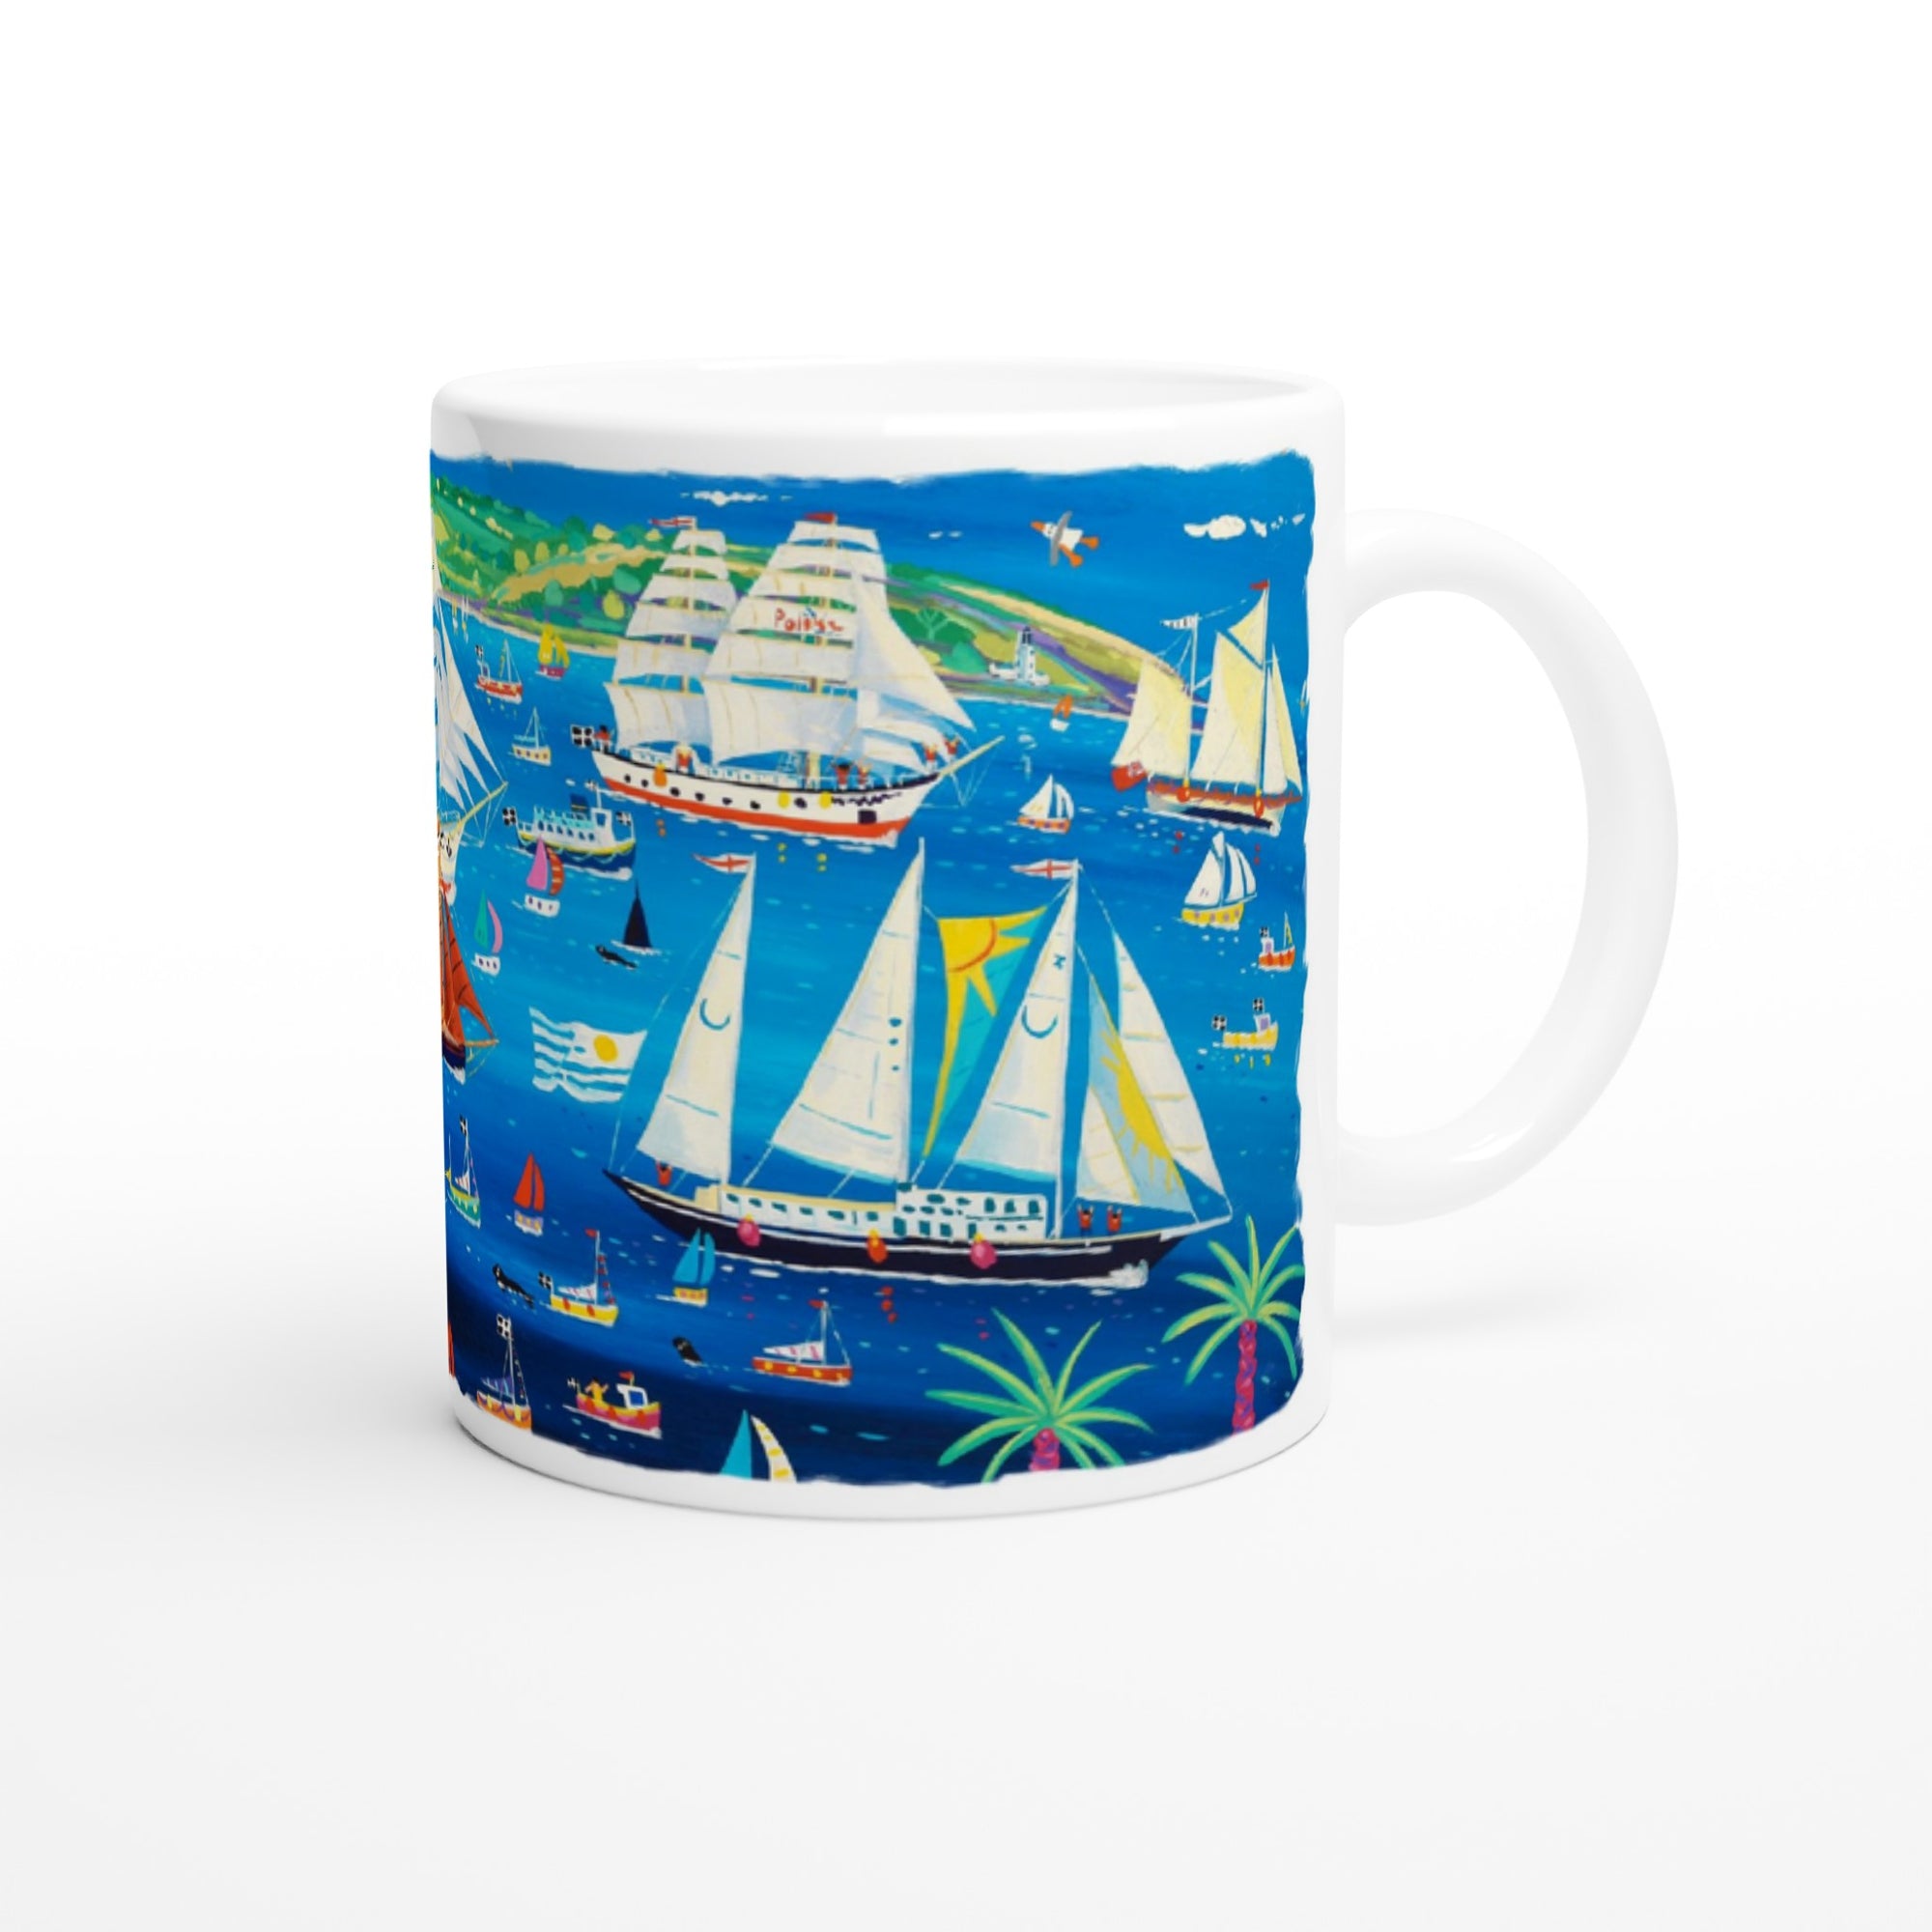 John Dyer Ceramic Cornish Art Mug. Tall Ships and Small Ships Falmouth